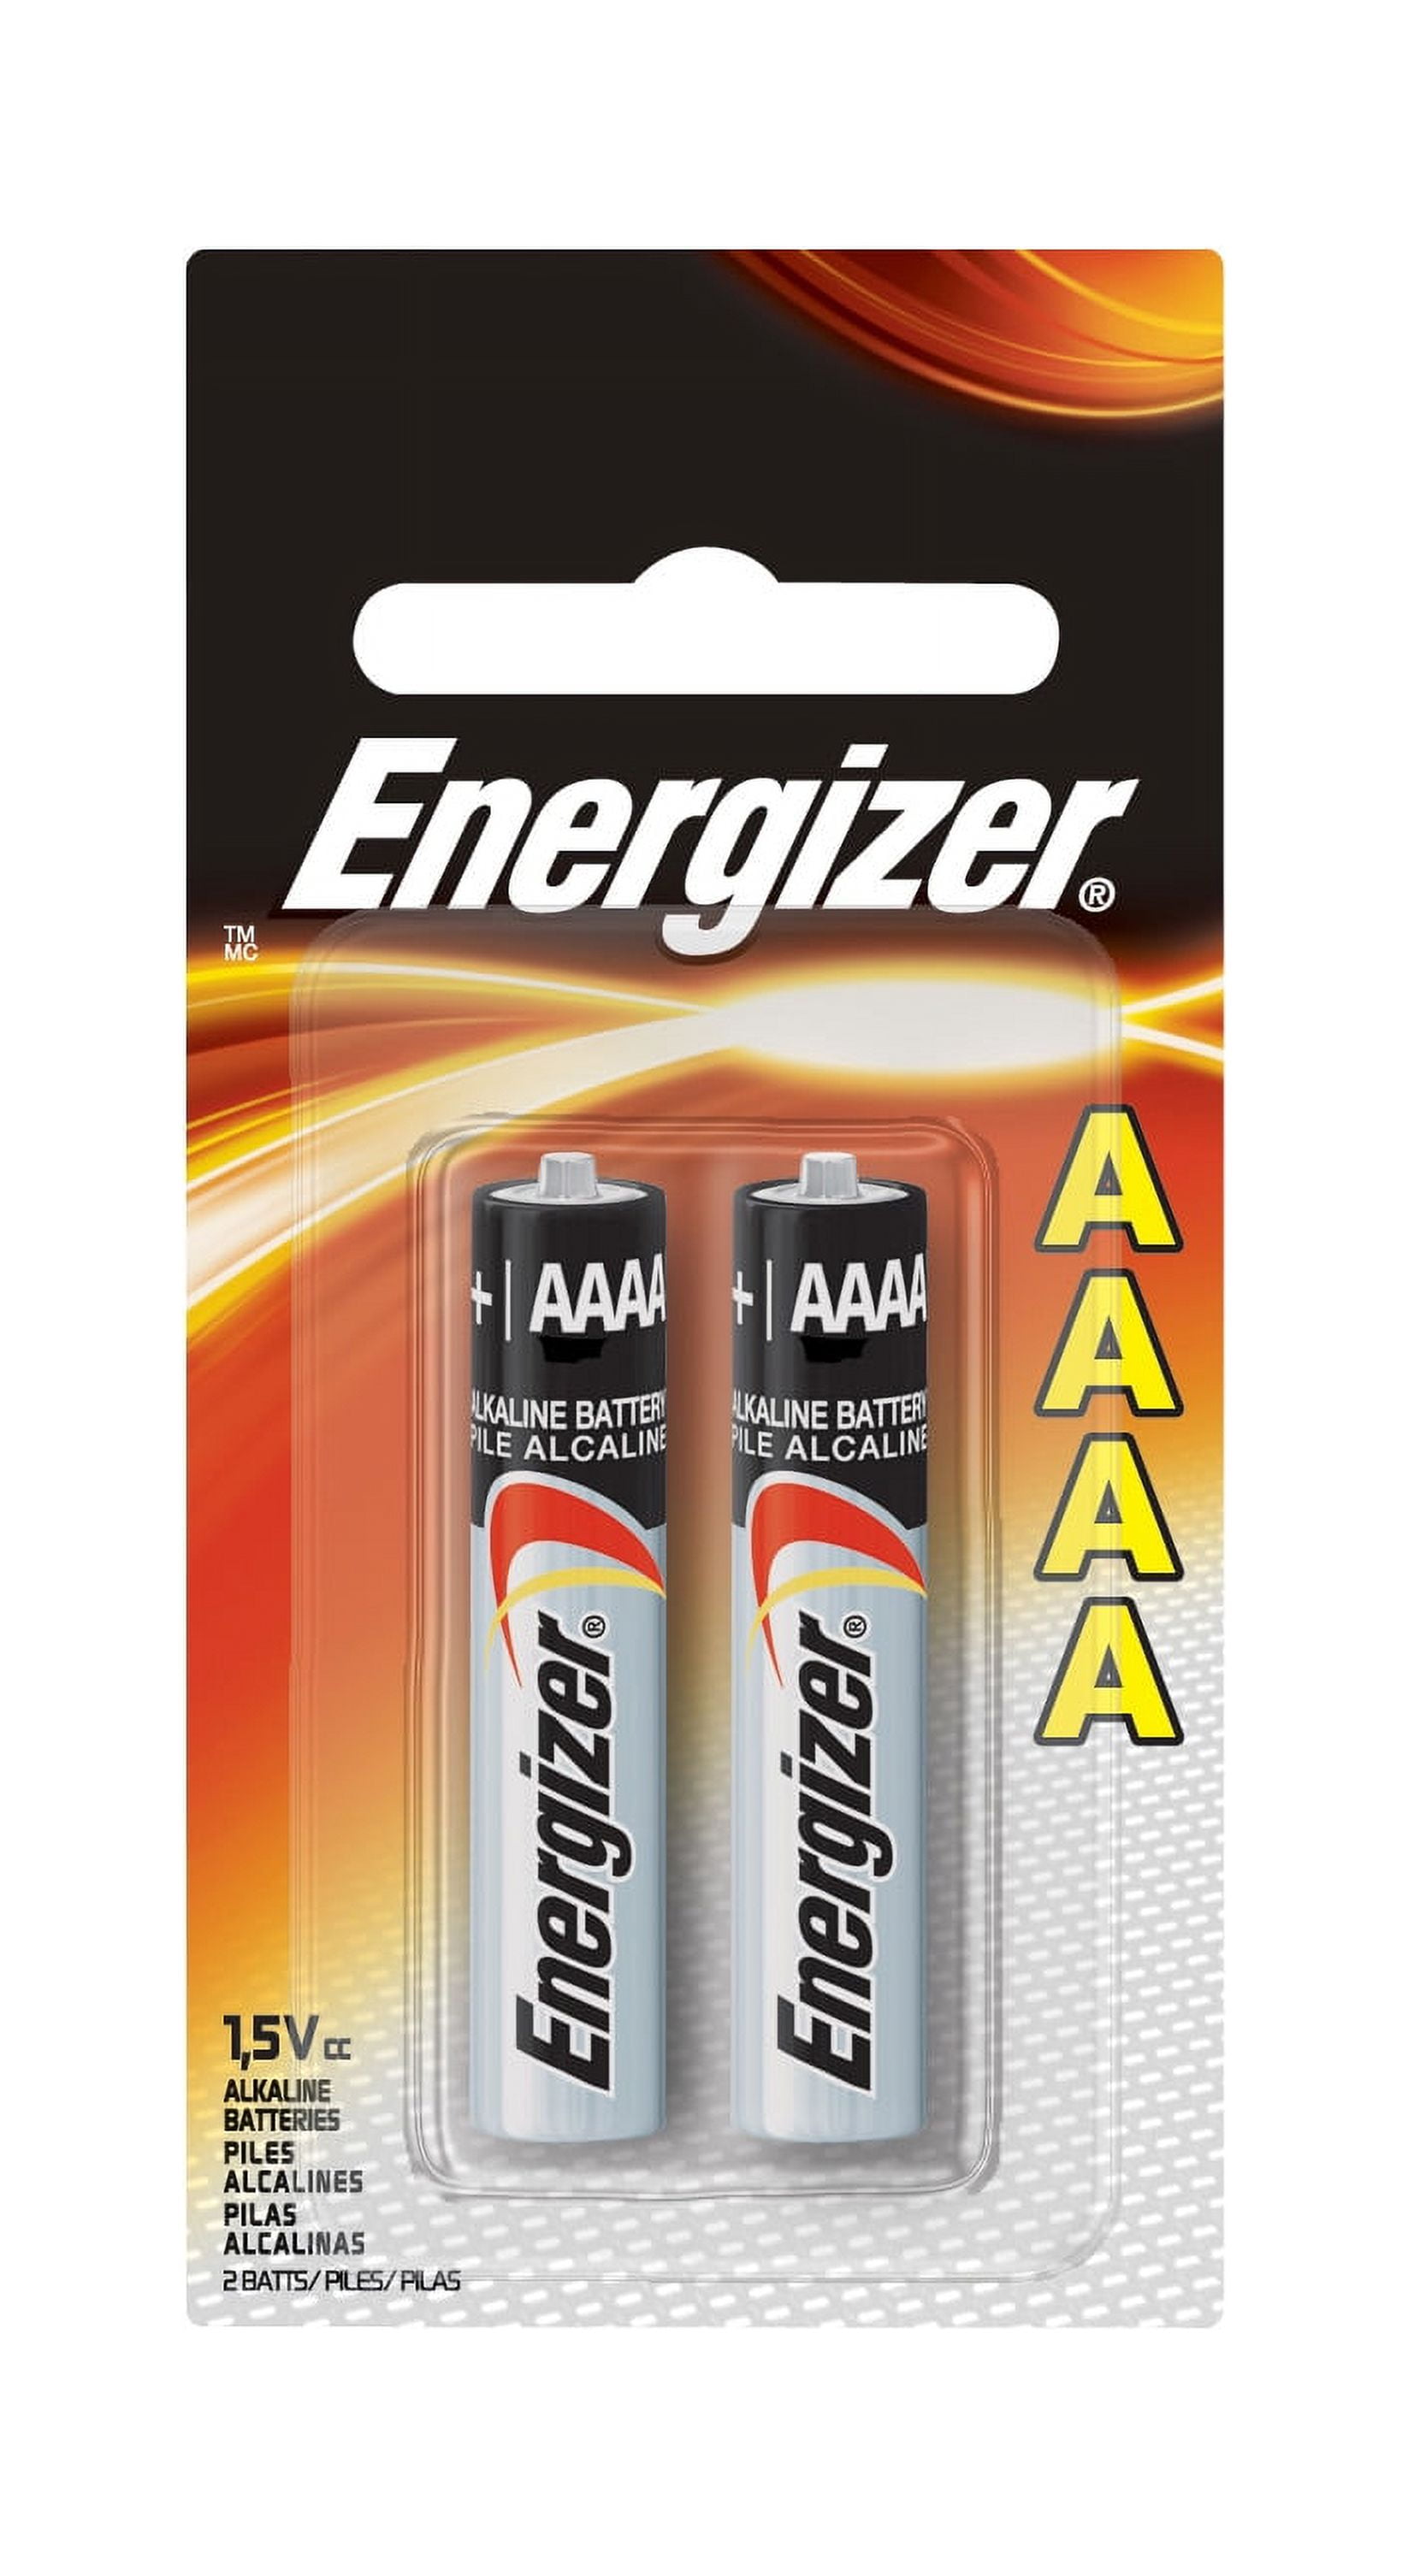 Energizer Max pilas alcalinas, D, 2 pilas/Pack